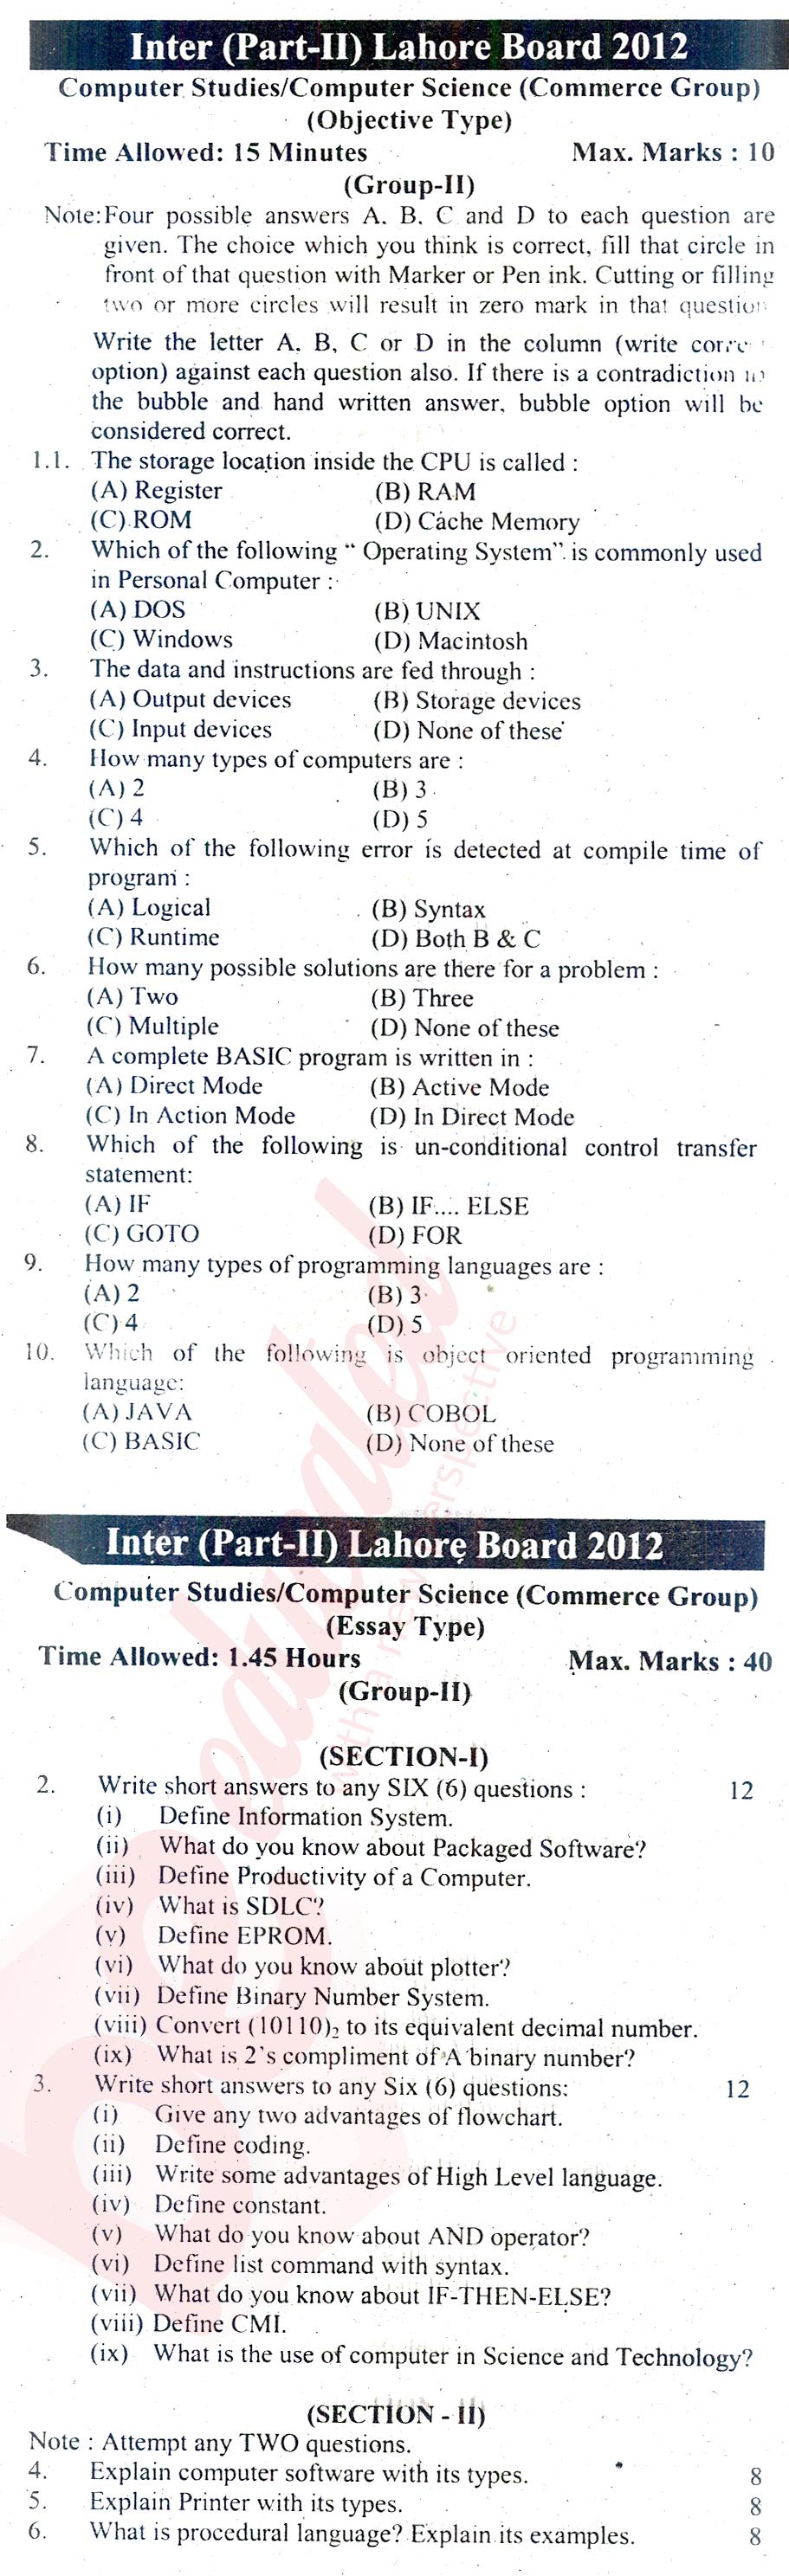 Computer Science ICOM Part 2 Past Paper Group 2 BISE Lahore 2012